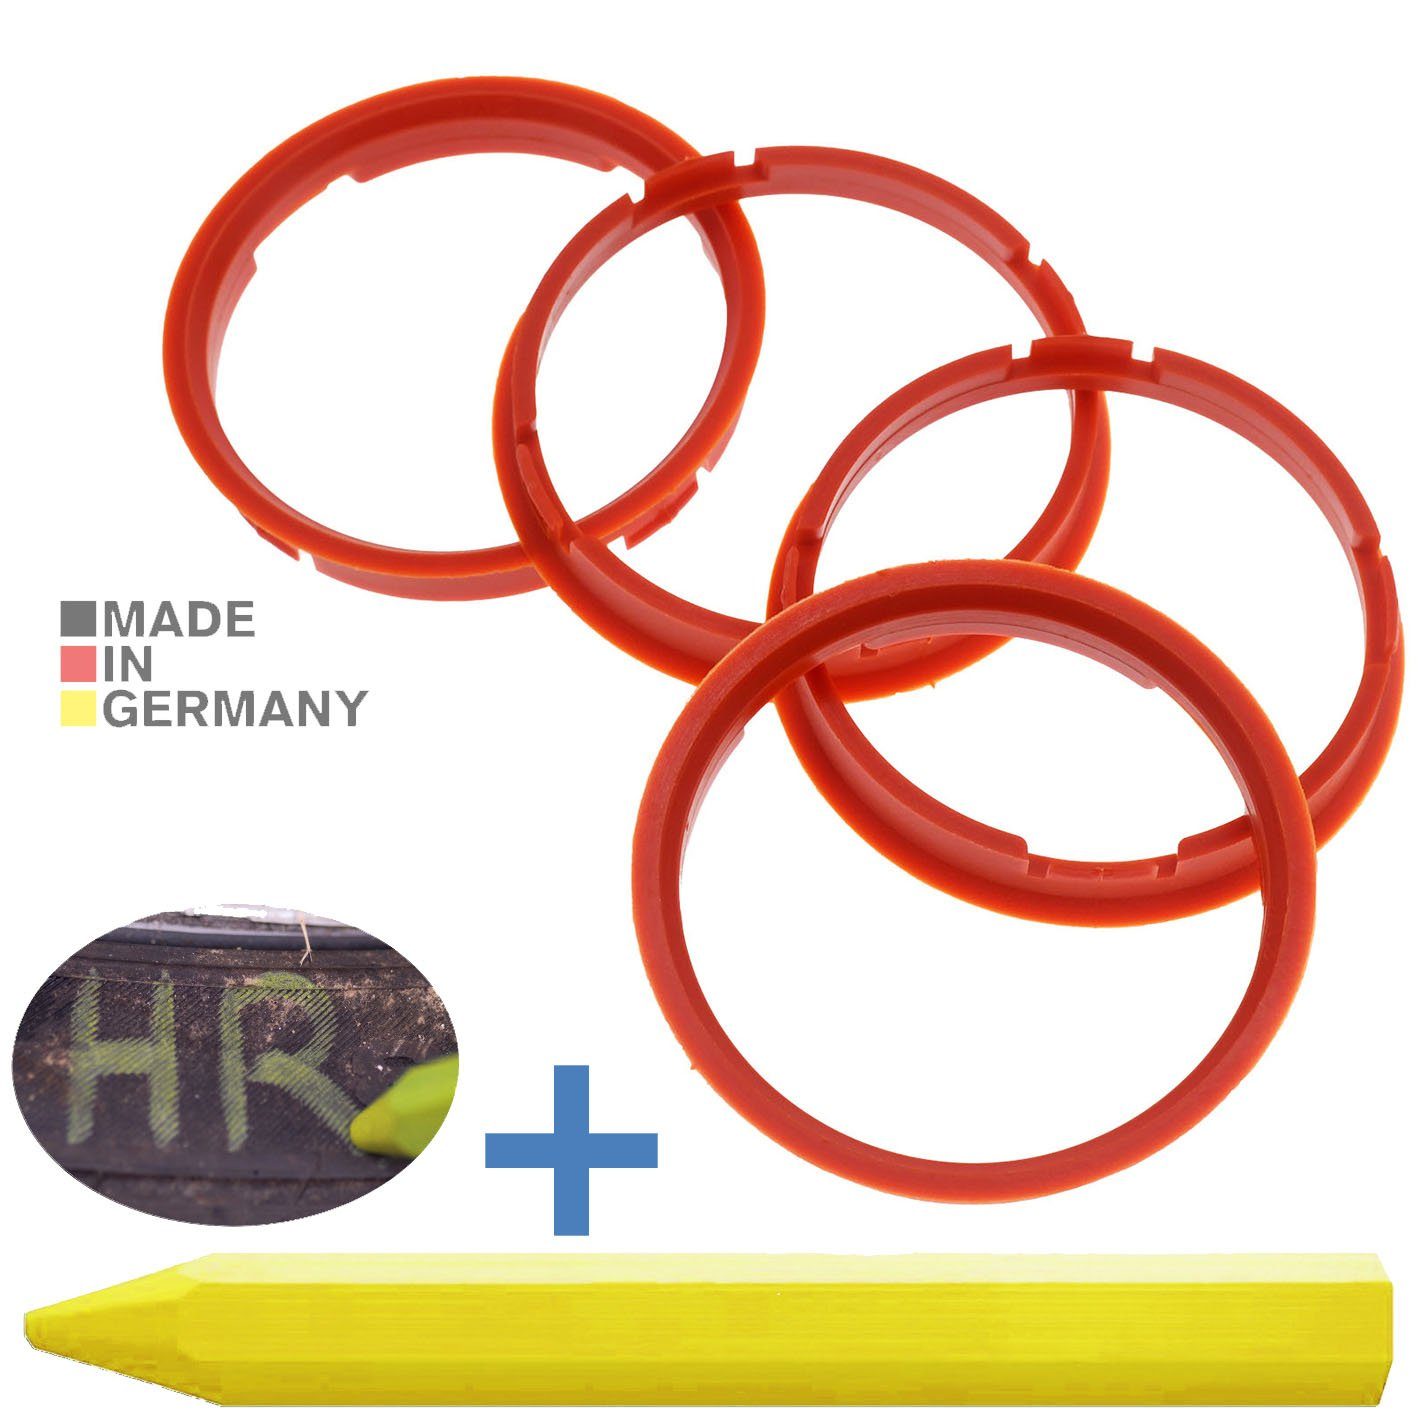 RKC Reifenstift 4X Zentrierringe Orange Felgen Ringe + 1x Reifen Kreide Fett Stift, Maße: 73,0 x 67,1 mm